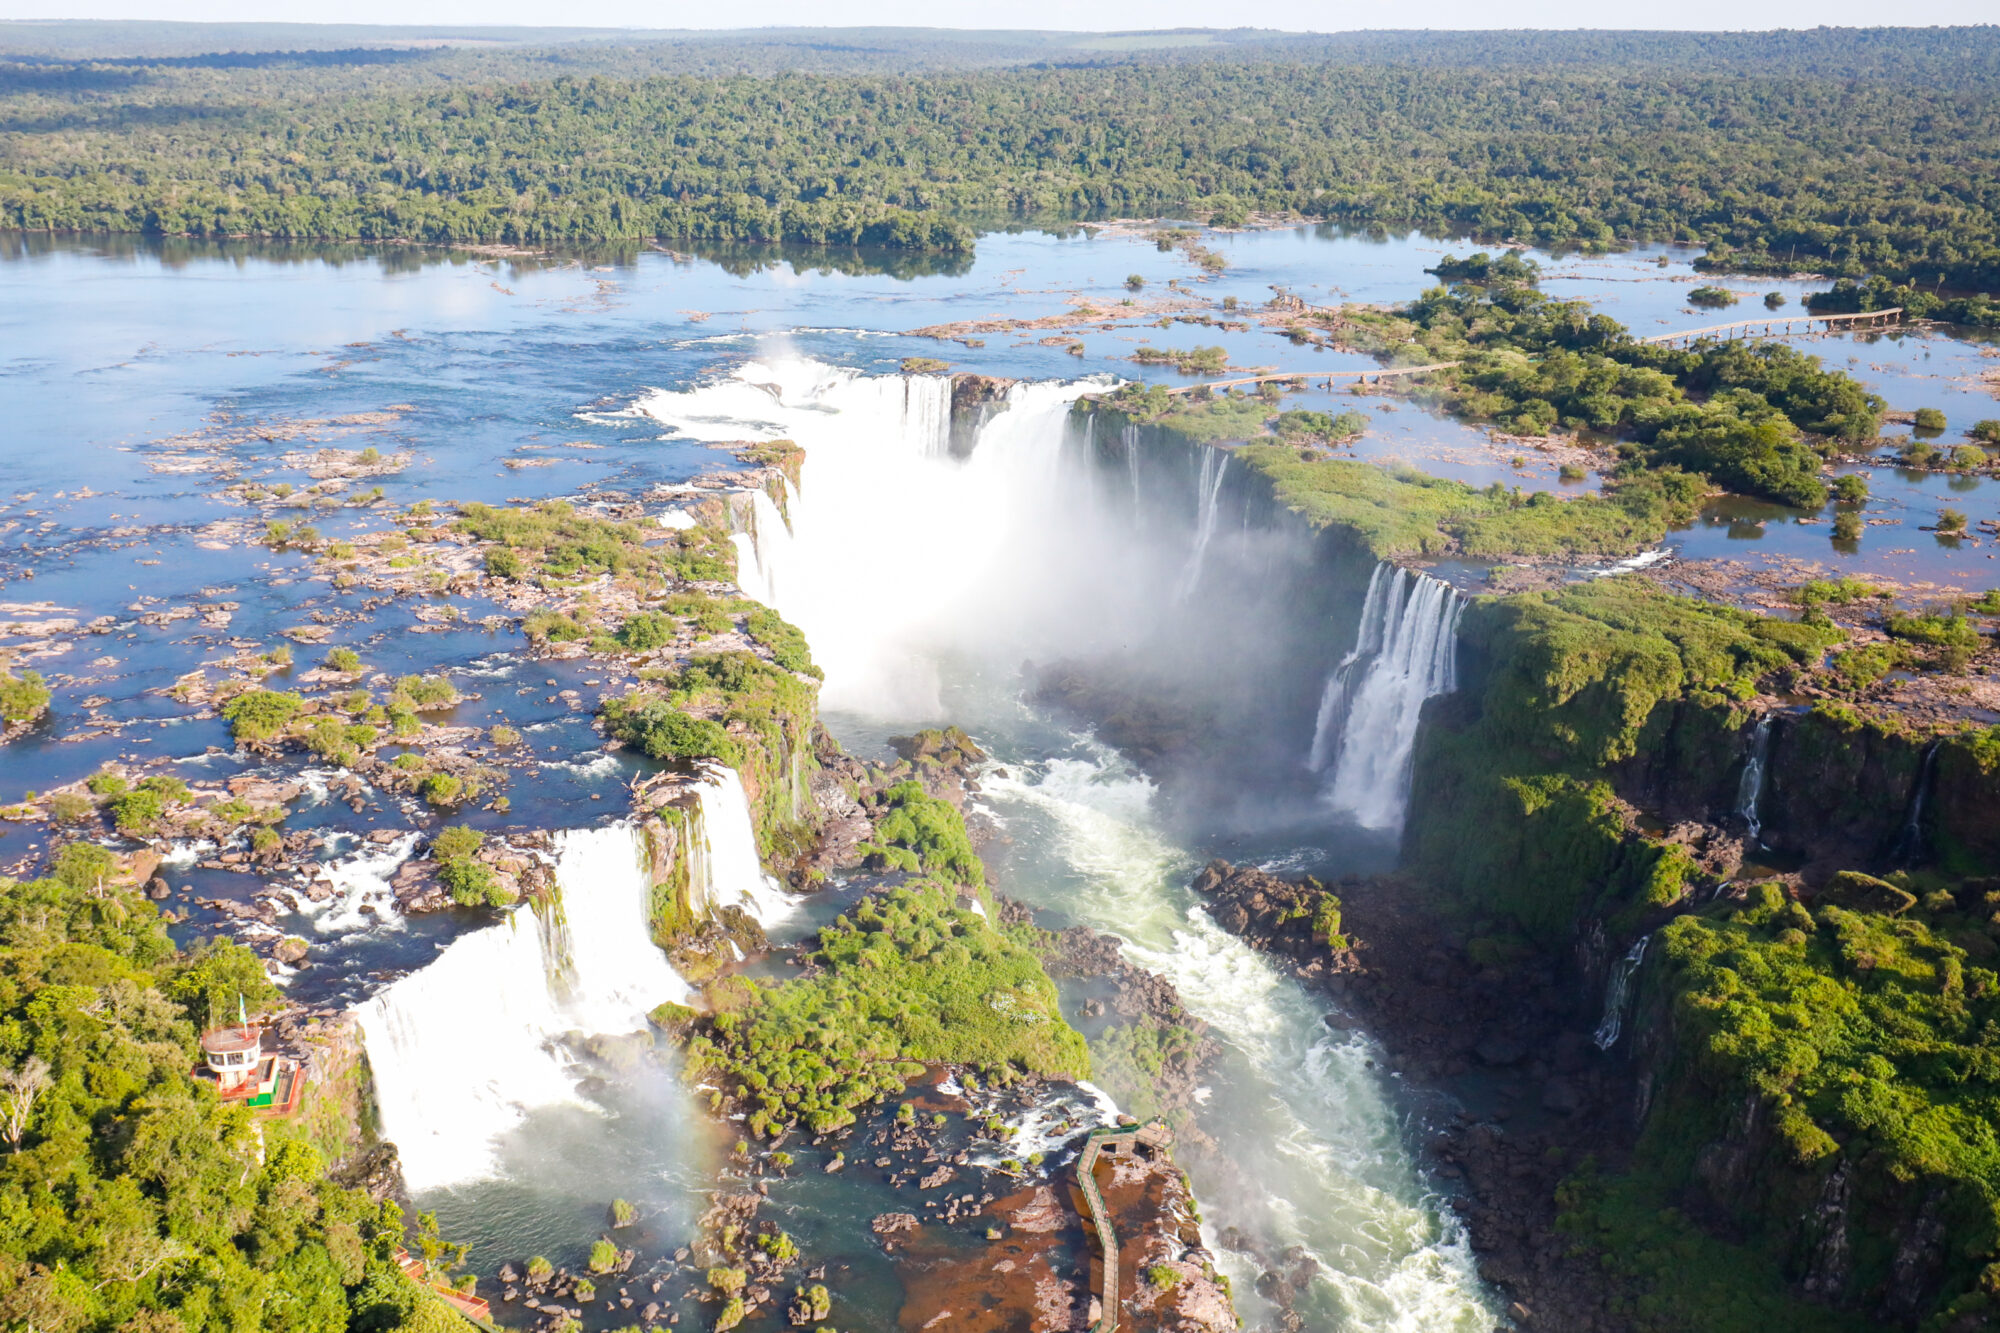 <p>The Iguazu Falls, located at the border of Brazil and Argentina. The two countries also share a border with Paraguay at the meeting of the Iguazu and Paraná rivers, and have engaged in efforts to coordinate their shared water resources (Image: <a href="https://www.flickr.com/photos/palaciodoplanalto/51101909873/in/photolist-2kRGDrB-2kRM5dj-2n51EuC-2kRM5g5-2kRFpuJ-2kRFpz8-2n4VgLq-2kRFaBw-2kRM5hN-2n52YYa-2kRFUBh-2n51Hdi-2kRFUx4-2n51GP2-2kRM5ij-2n54yAe-2kRGDyW-2n51Fkk-2n51FDg-2onstxV-2n52WLz-2onxkfW-2n52XED-2n54z5f-2onstBs-2n52YLB-2n4VgBs-2kRFUzU-2kRFpws-2kRDNtd-2kRJwzU-2kRF5Us-2kREdRe-2kREKMQ-2kRG1x1-2n52Z69-2n52YxW-2kREdPA-2kREdM6-2ifsoUo-2kRLKEs-2kRLr8n-2kREL53-2kREL2s-2kRG1bj-2kREiB9-2kREixm-2kREL4w-2kRDNwe-2kRJwwC/">Alan Santos</a> /<a href="https://www.flickr.com/people/palaciodoplanalto/">Palácio do Planalto</a>, <a href="https://creativecommons.org/licenses/by/2.0/">CC BY</a>)</p>